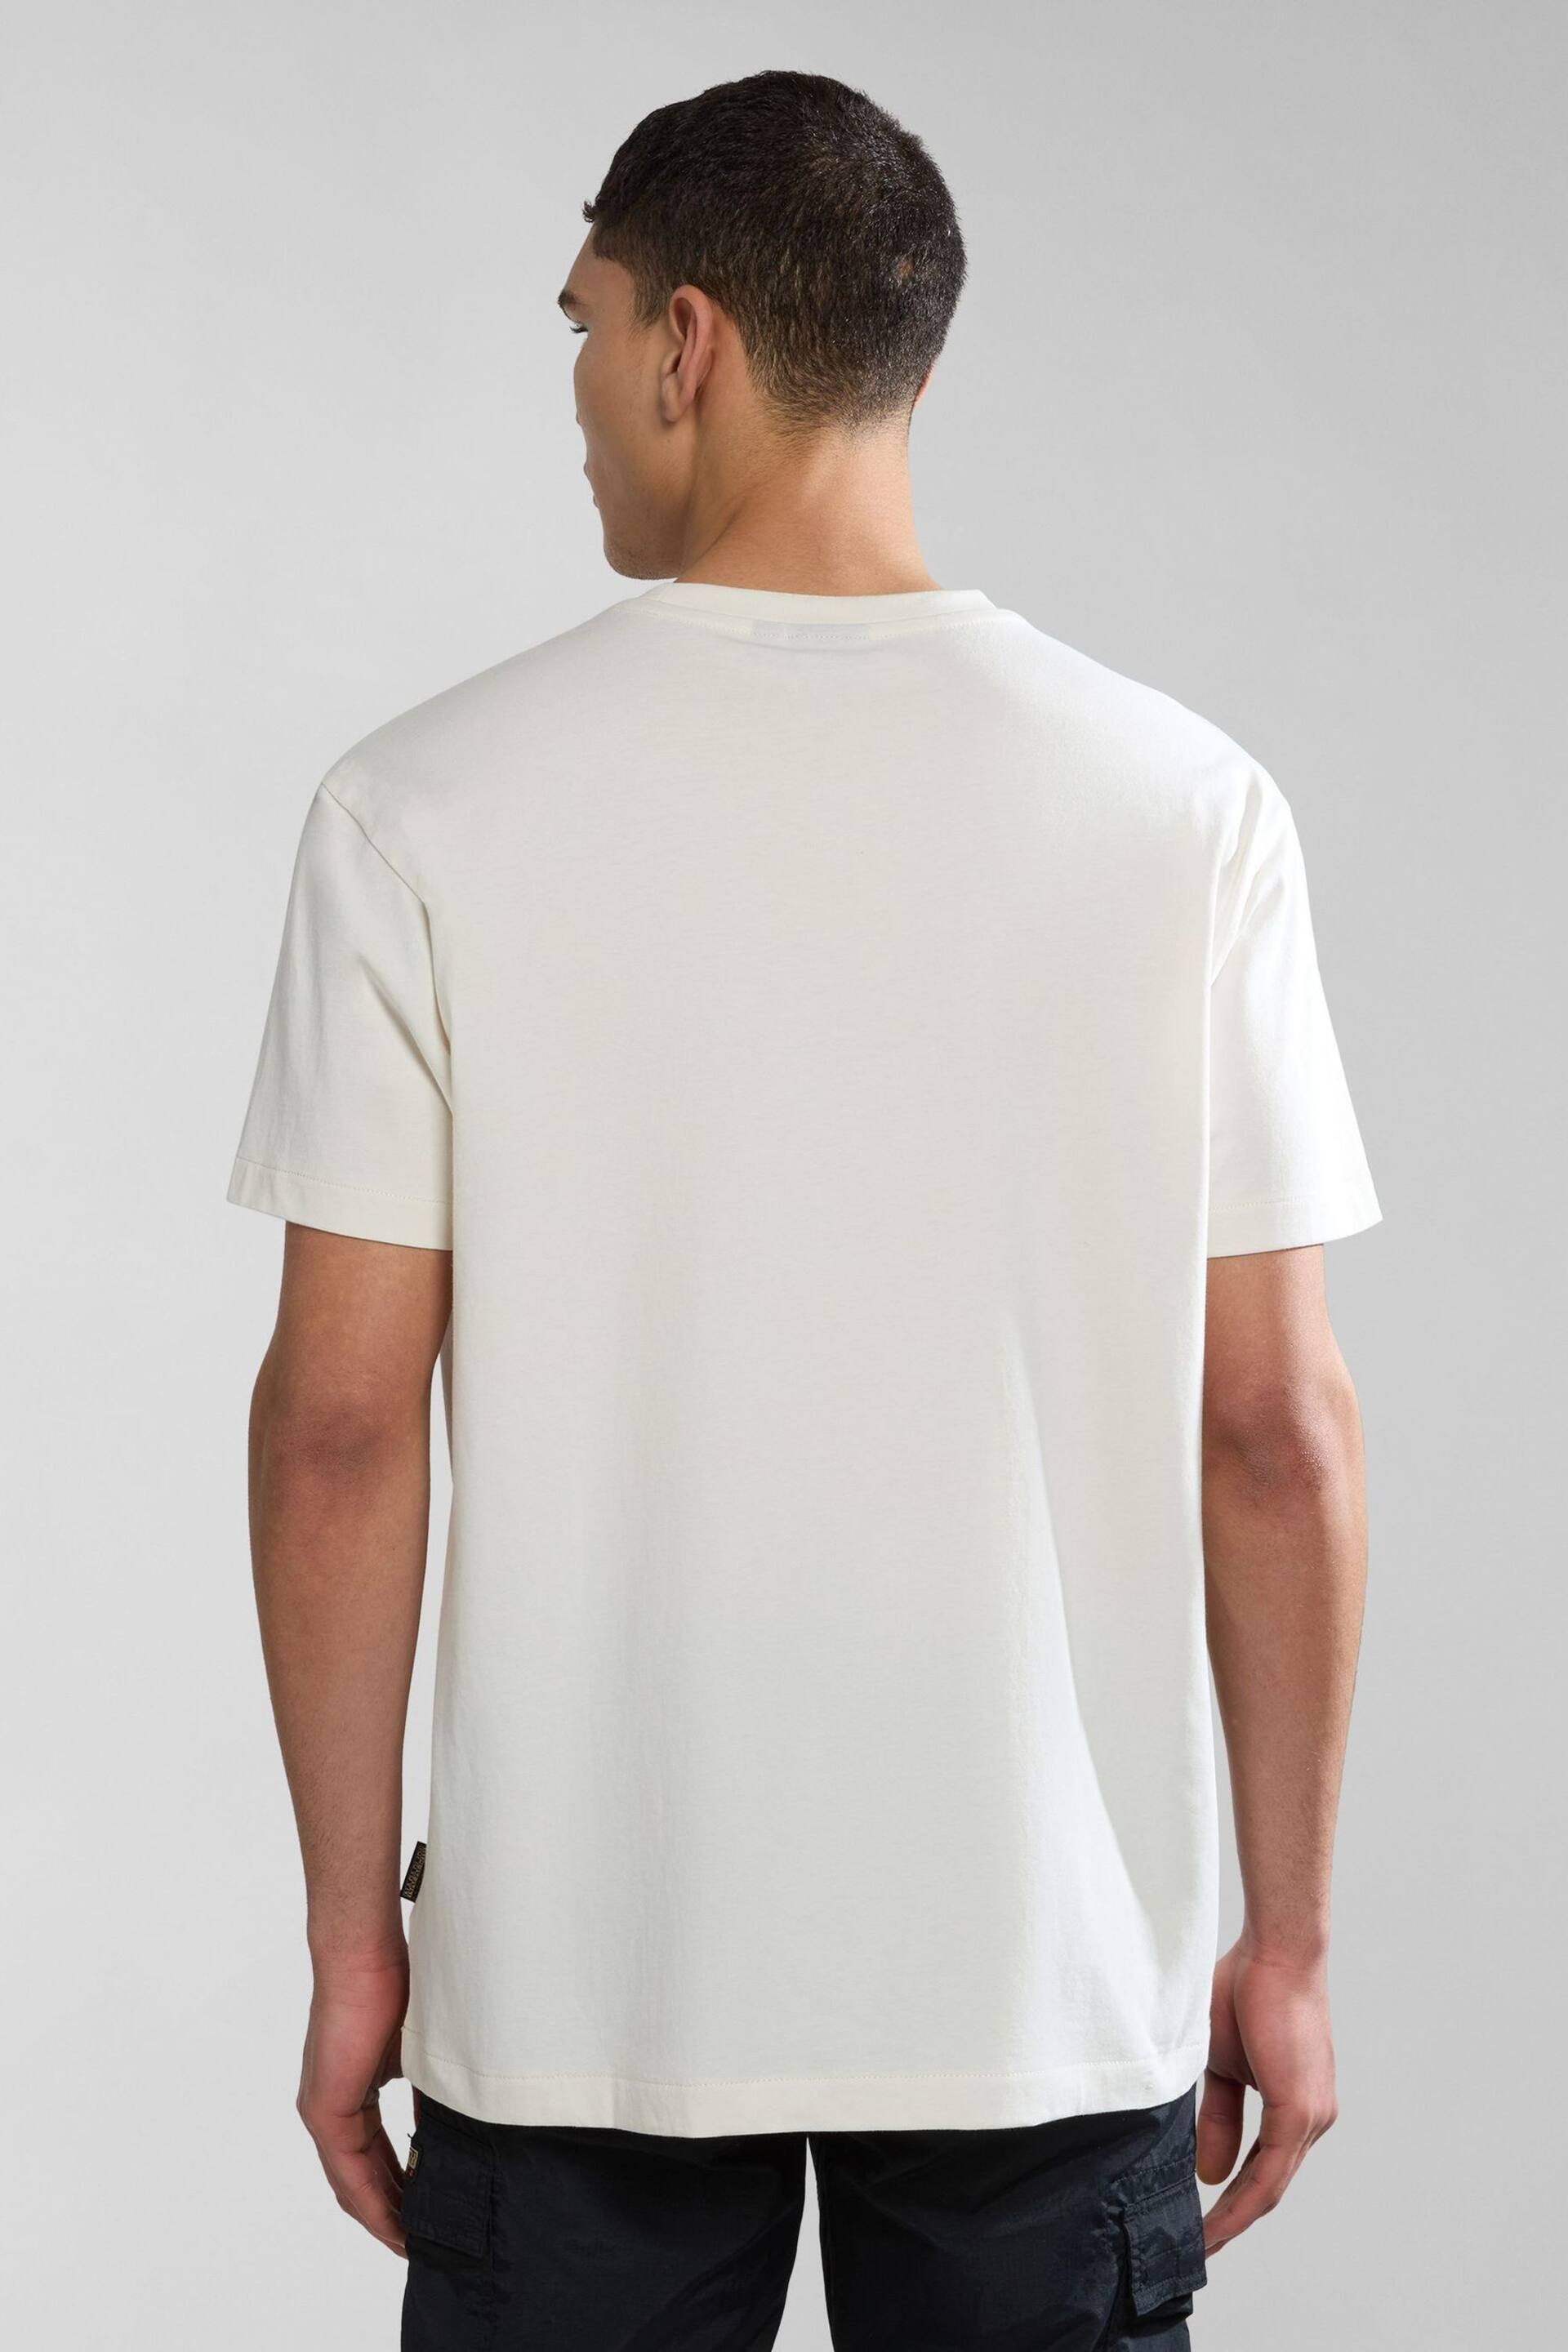 Napapijri Box Logo White Short Sleeve T-Shirt - Image 3 of 6